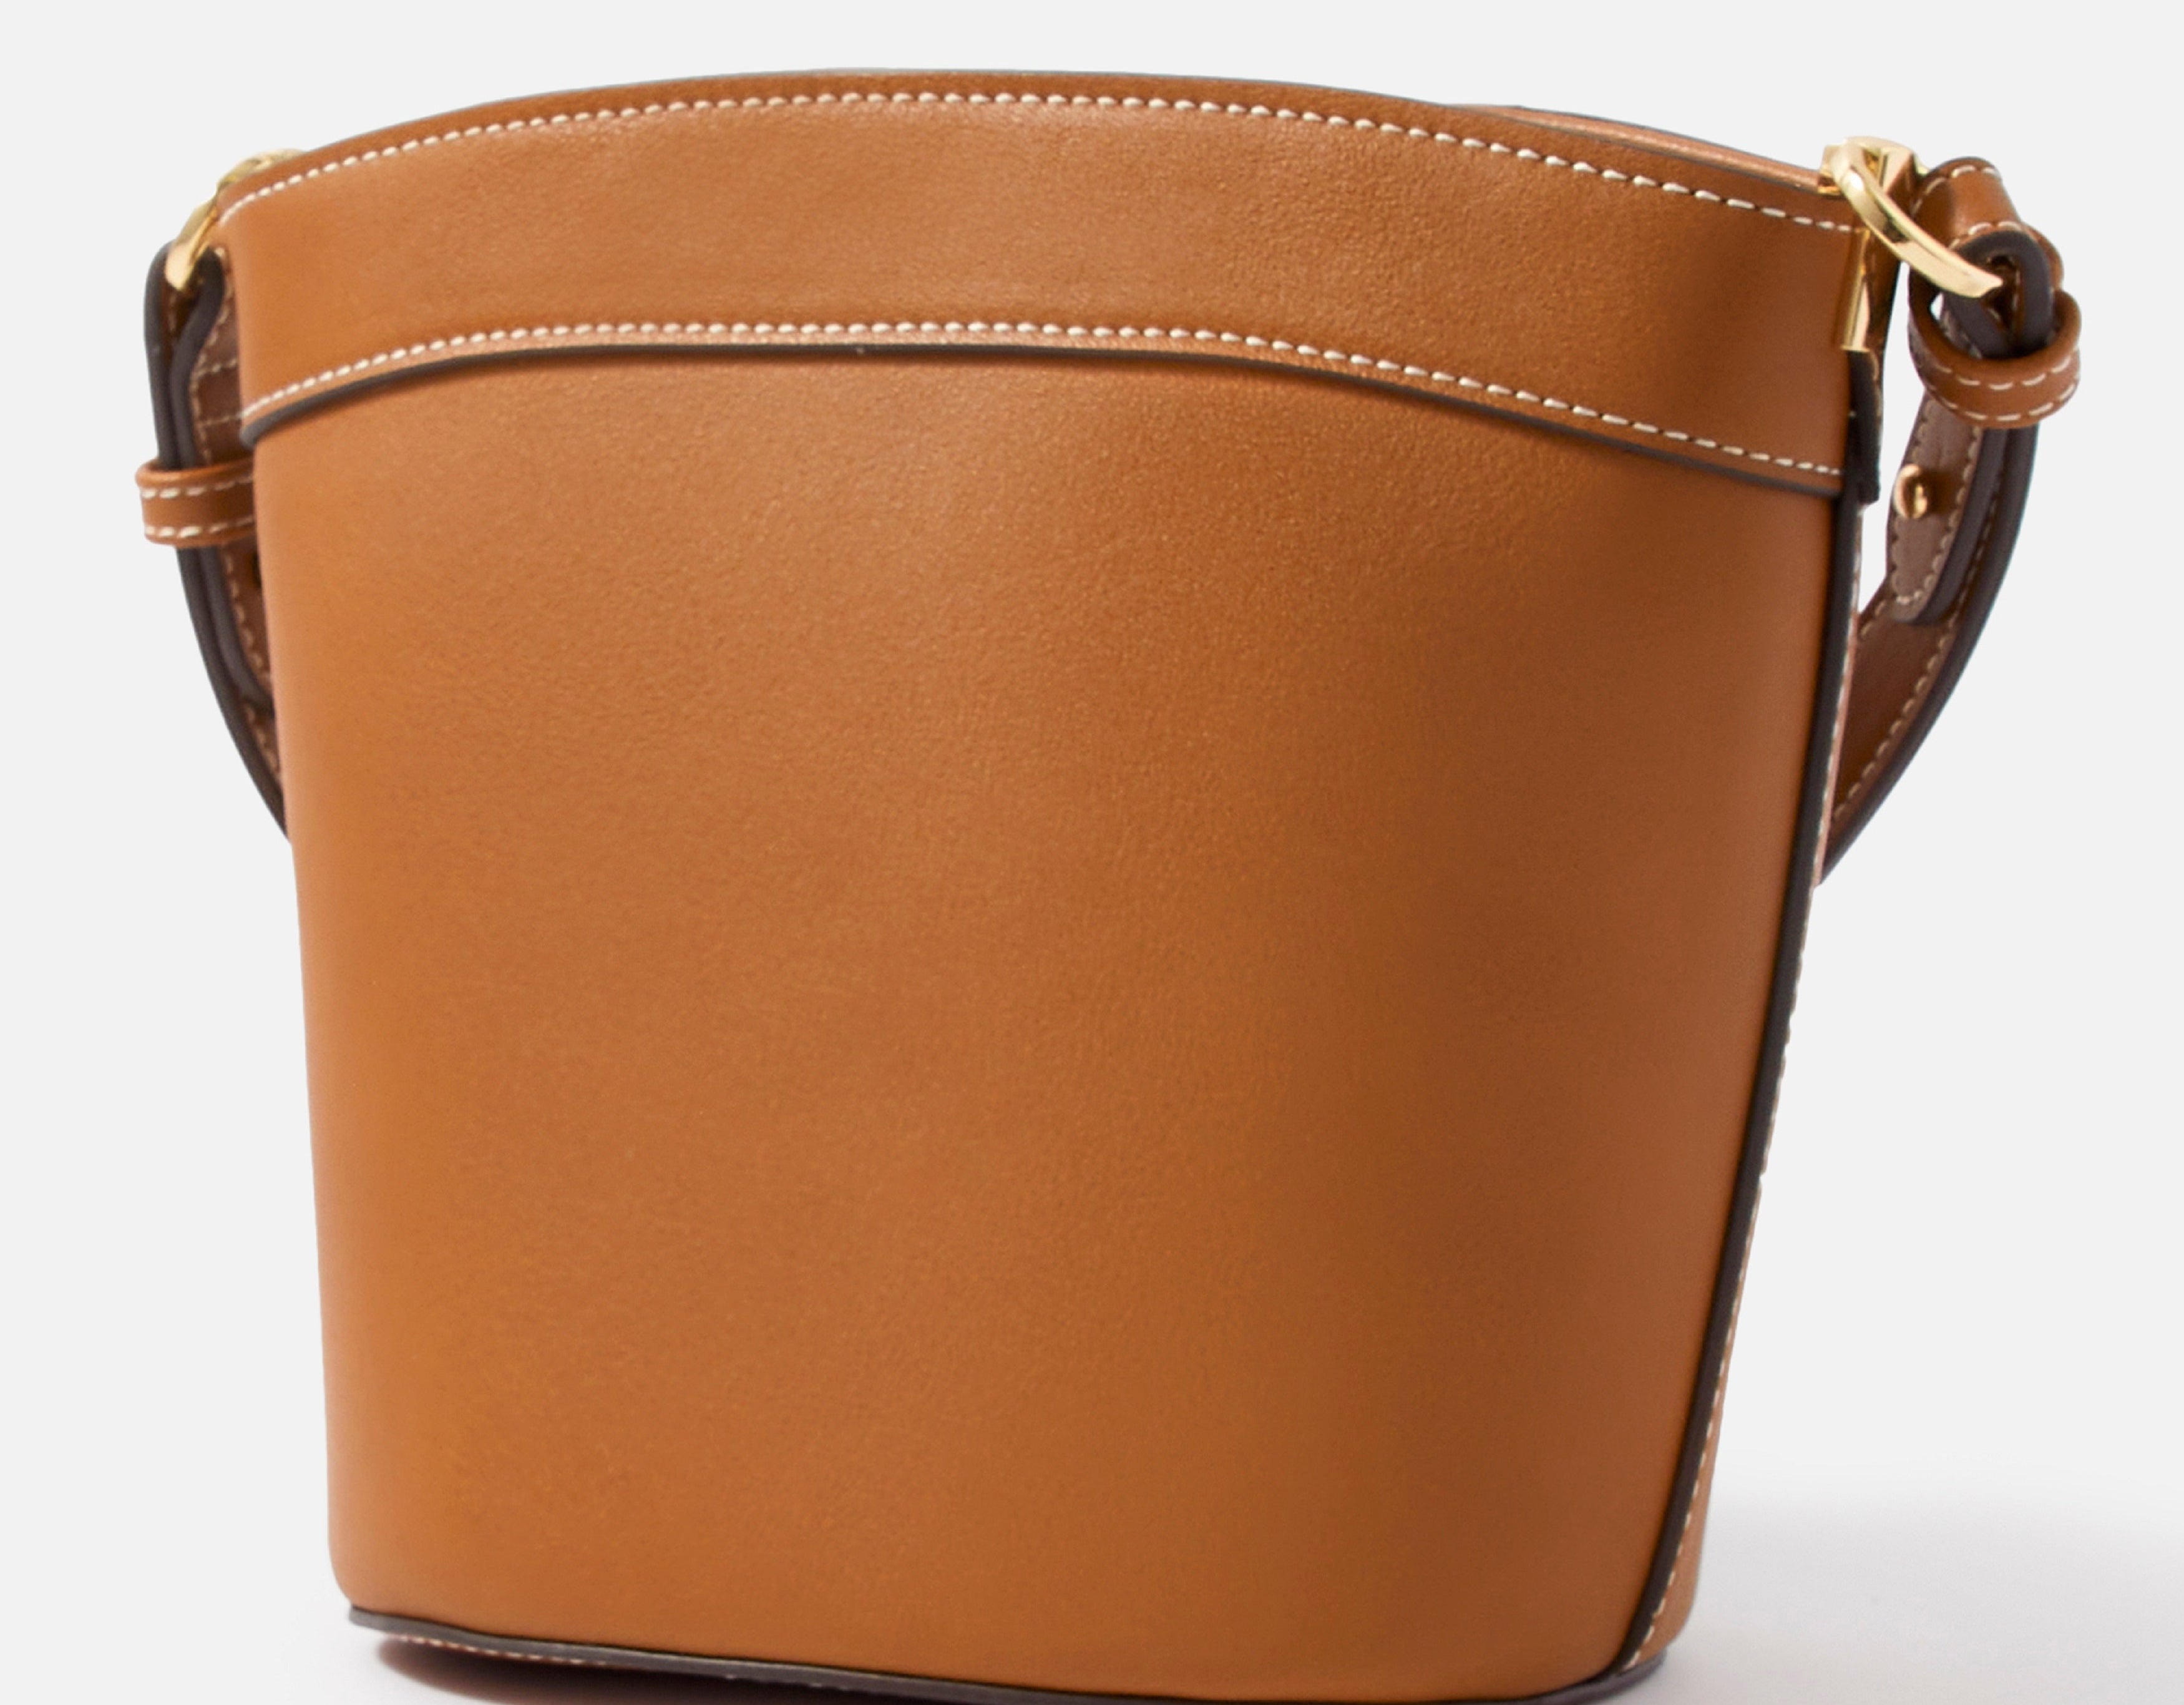 Accessorize London women's Faux Leather Danielle Detail Tan Sling bag